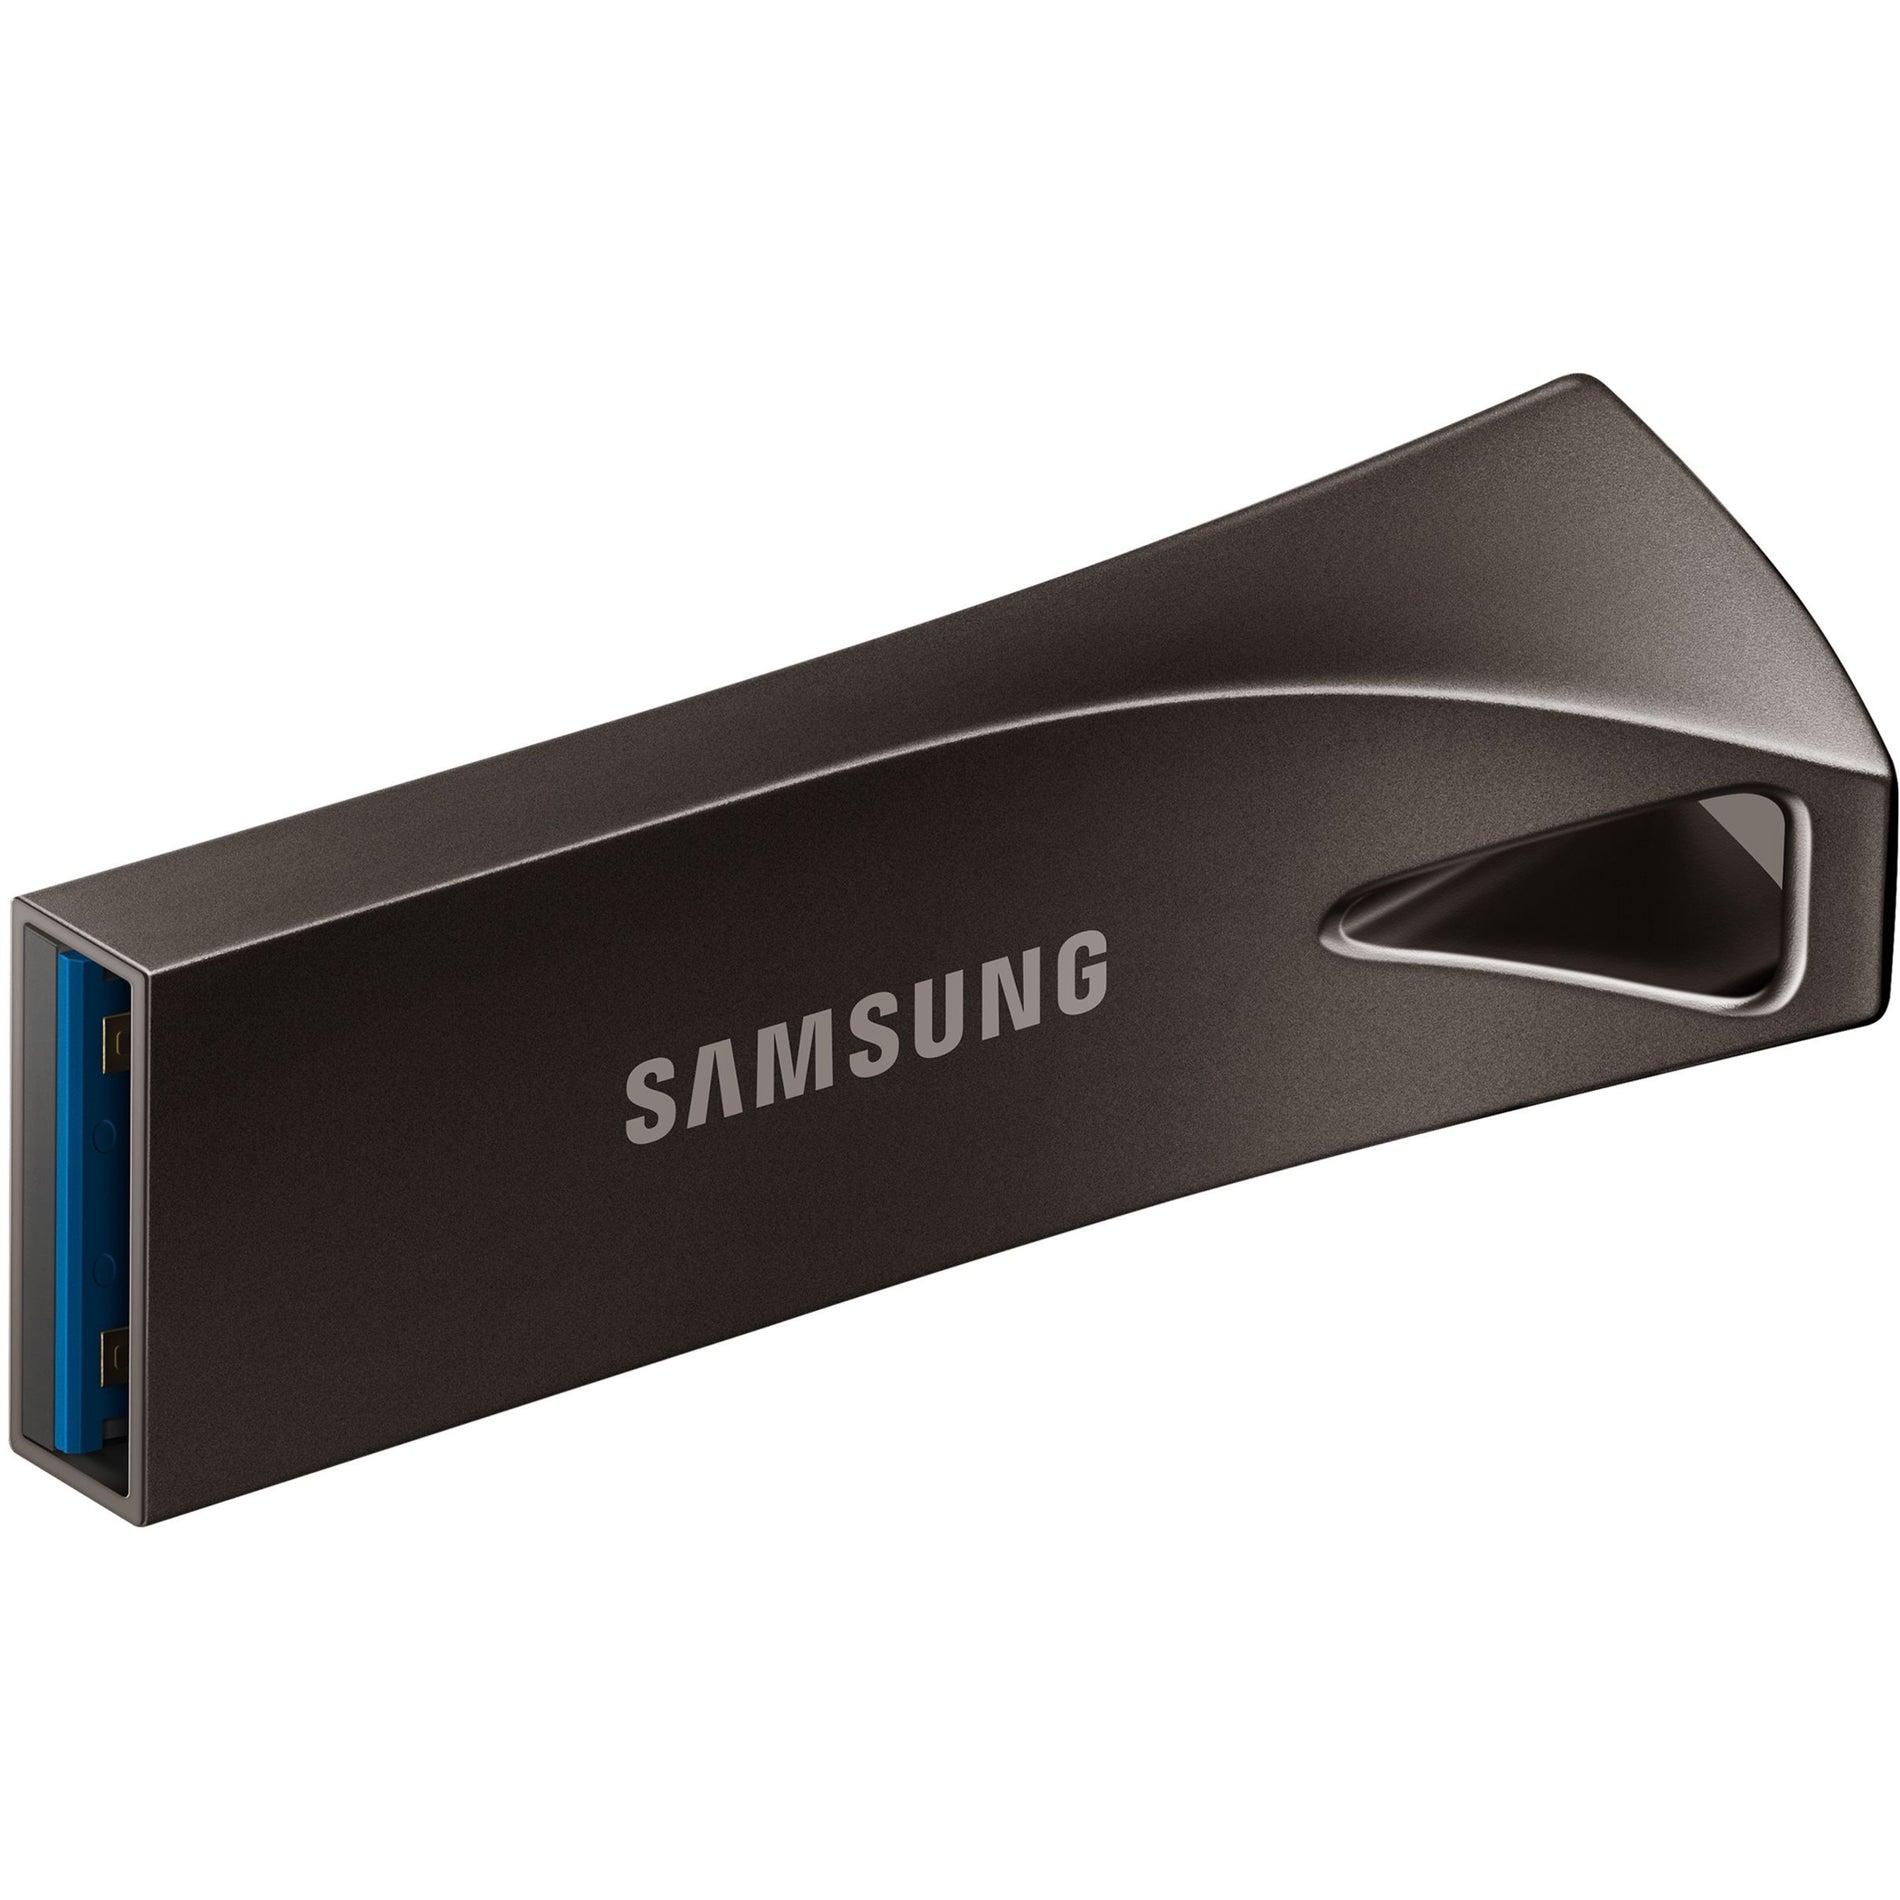 Samsung MUF-256BE4/AM USB 3.1 Flash Drive BAR Plus 256GB Titan Gray, 5 Year Warranty